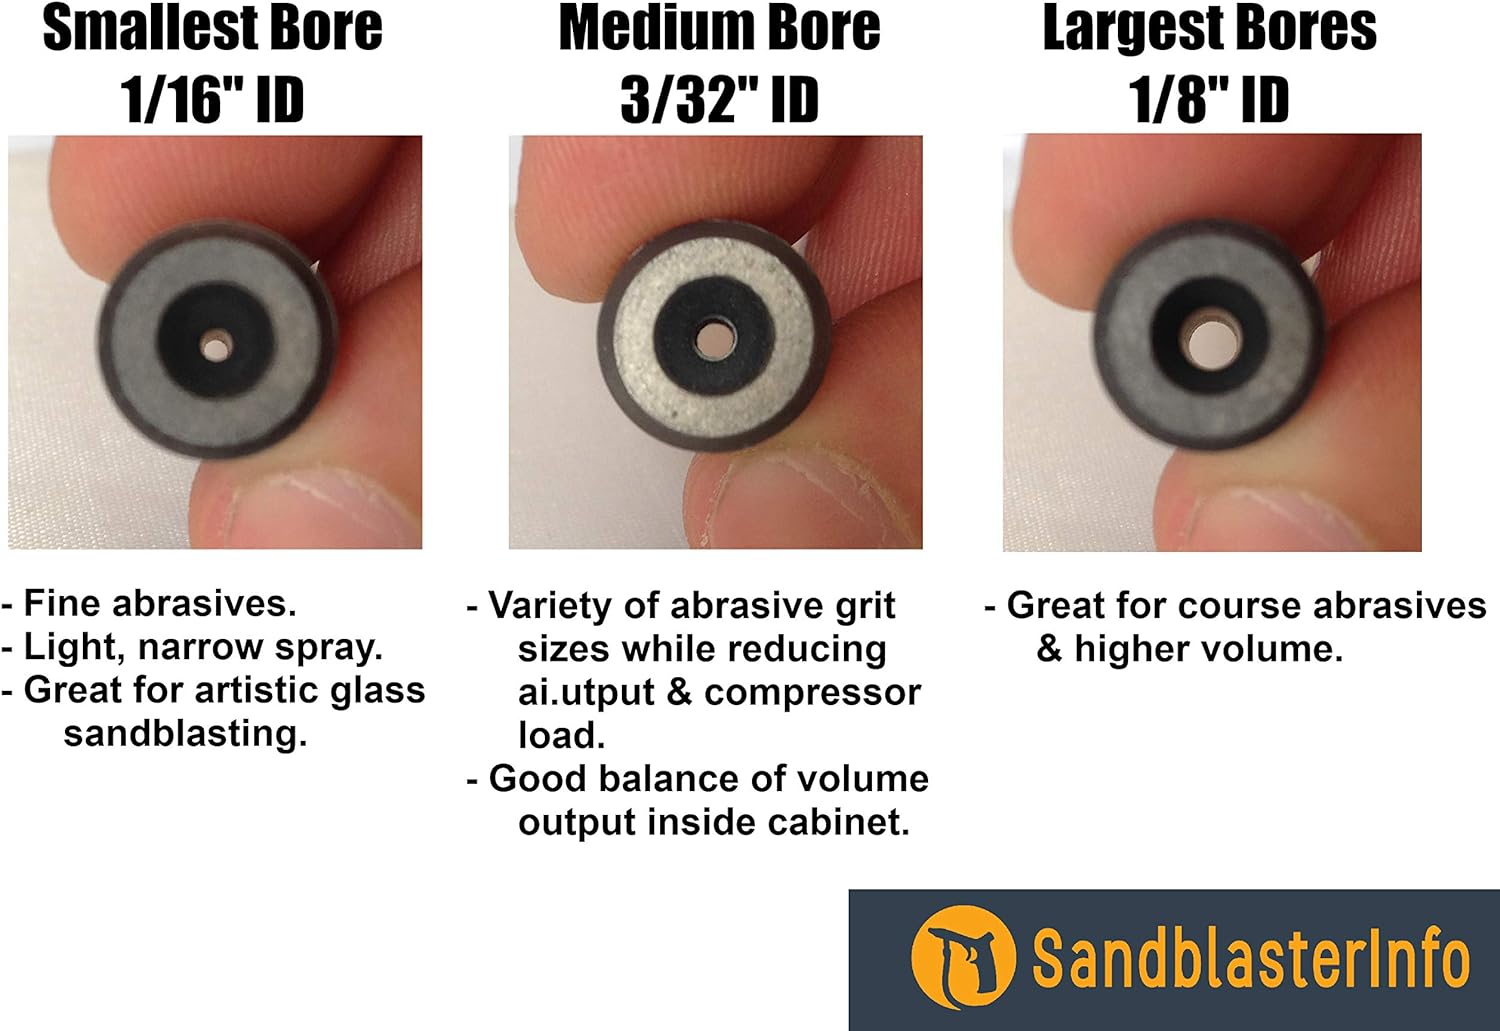 Sandblasterinfo Composite Carbide Sandblaster Nozzle Tip: 3/32" ID, Longer-Lasting than Tungsten